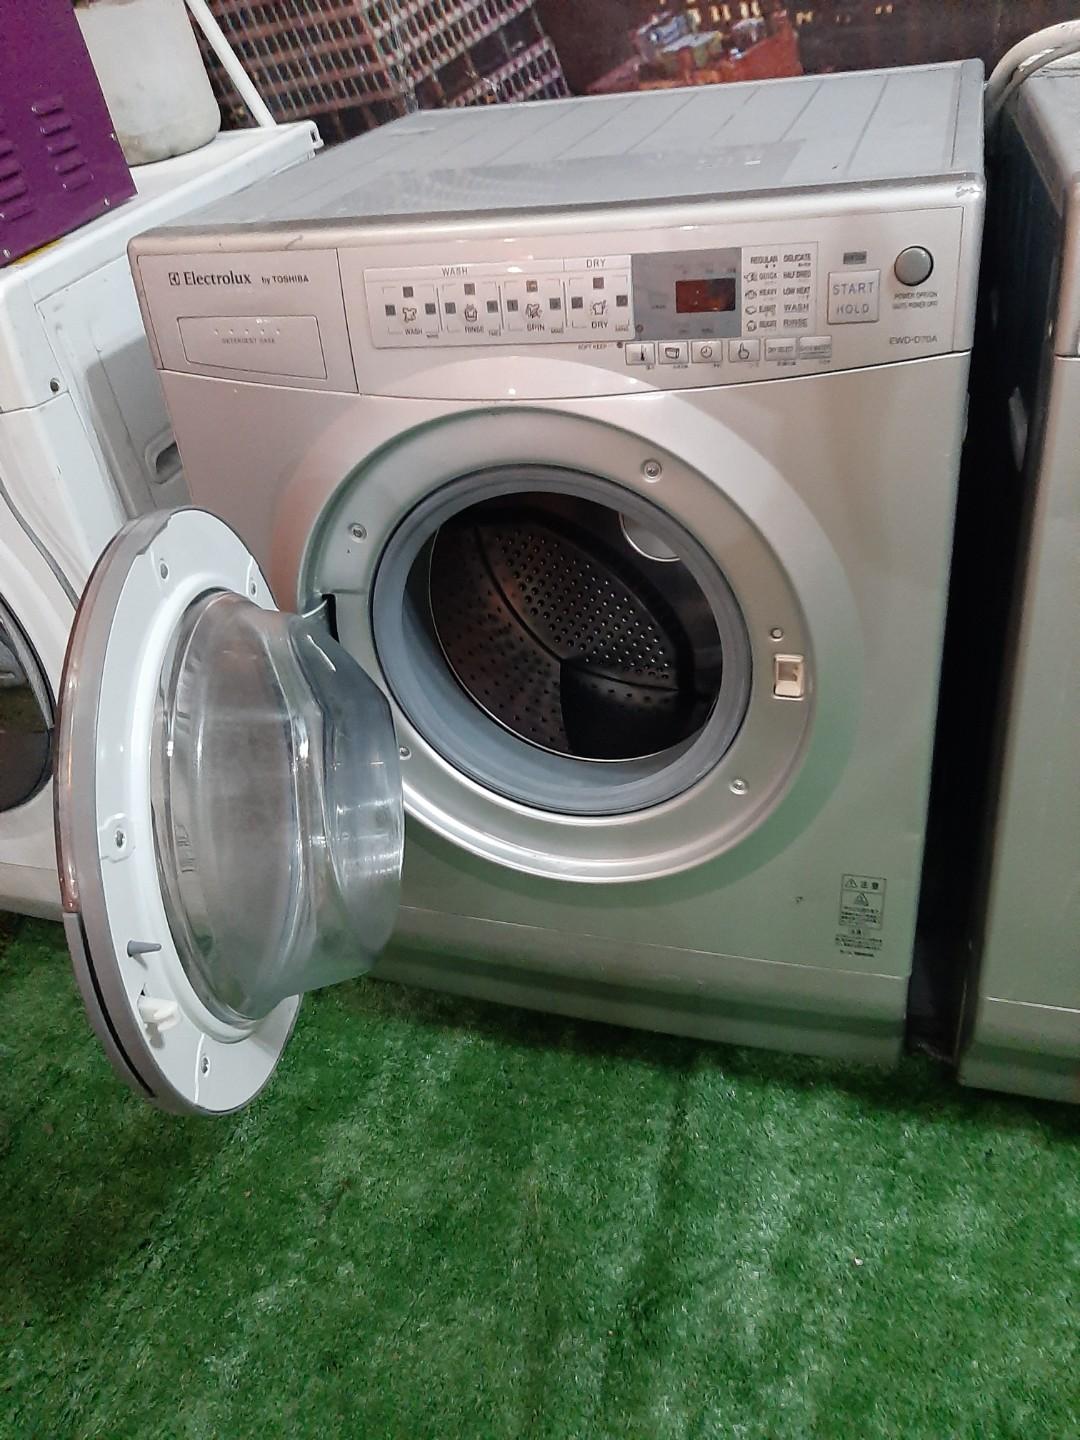 Electrolux Toshiba Automatic Washing Machine with 100%Heatdryer Full ...